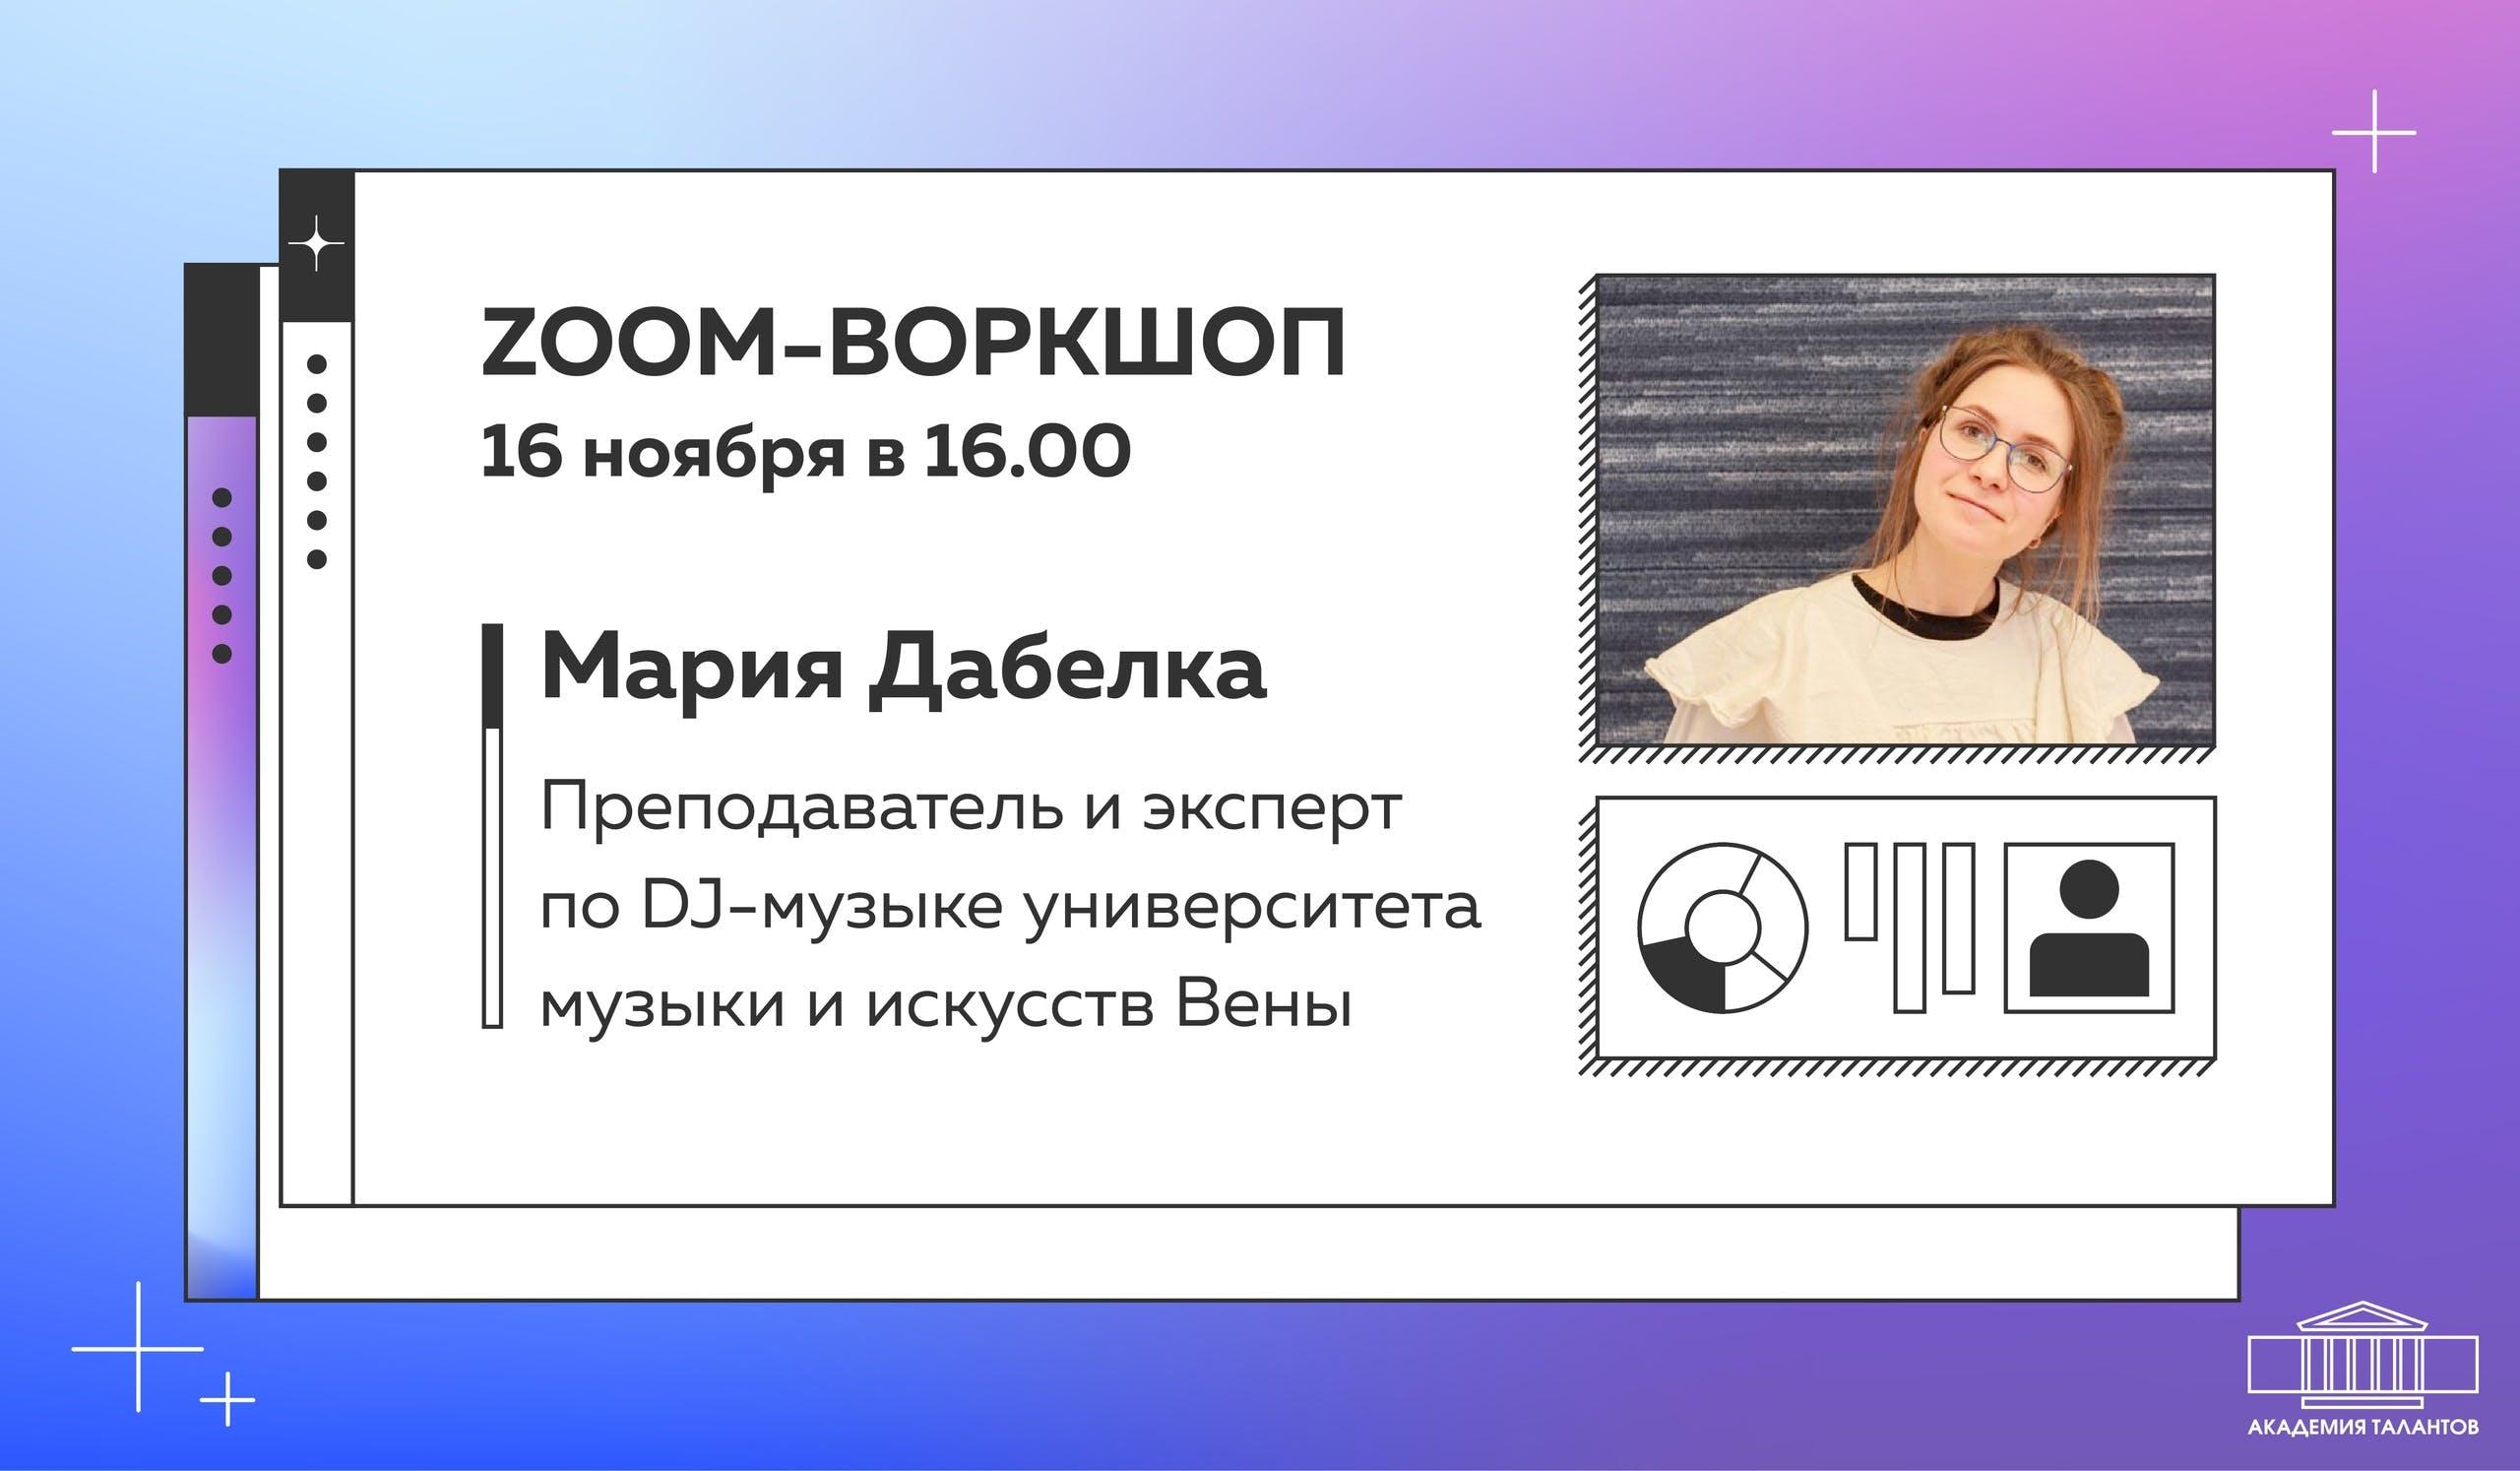 Poster Zoom-Workshop Masha Dabelka, picture: Academy of Talents